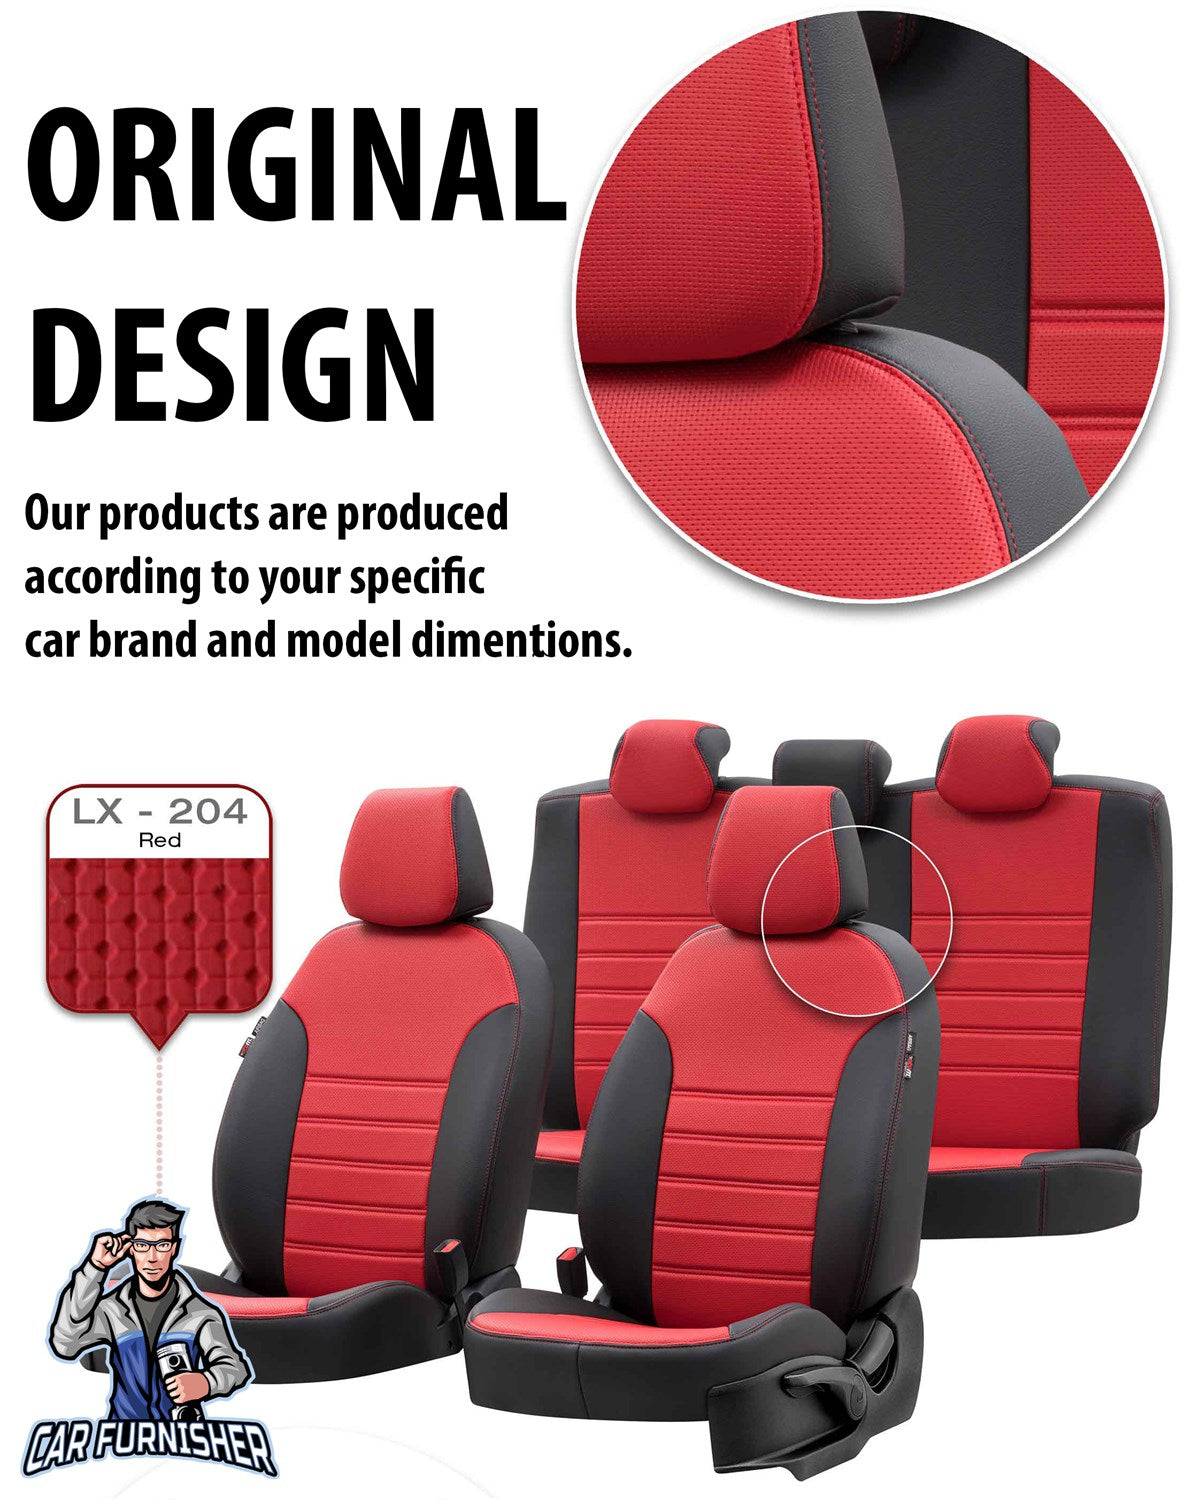 Isuzu L35 Seat Cover New York Leather Design Ivory Leather